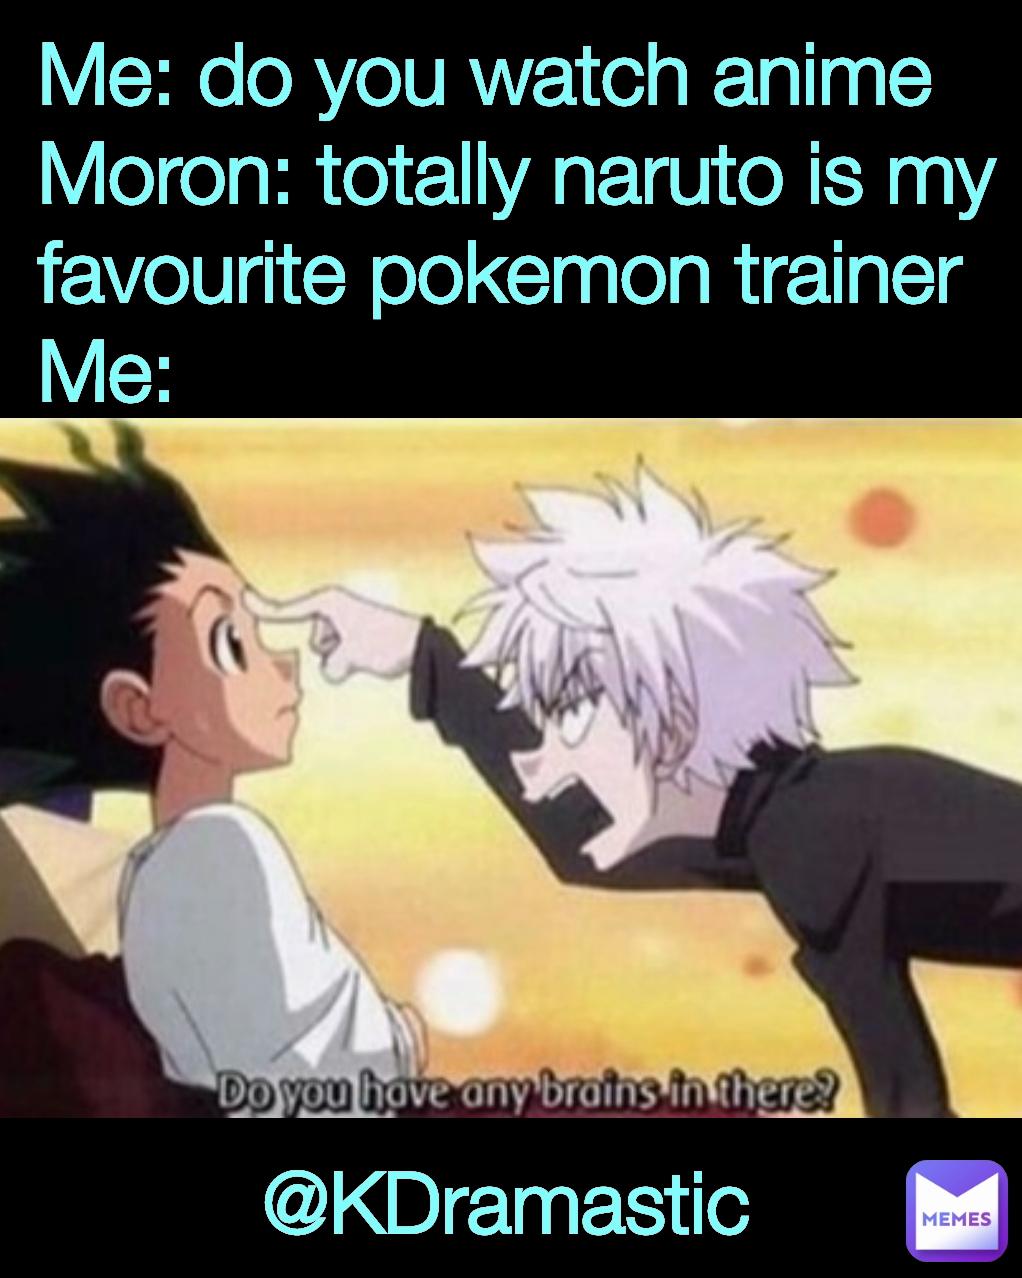 Me: do you watch anime
Moron: totally naruto is my favourite pokemon trainer
Me: @KDramastic 